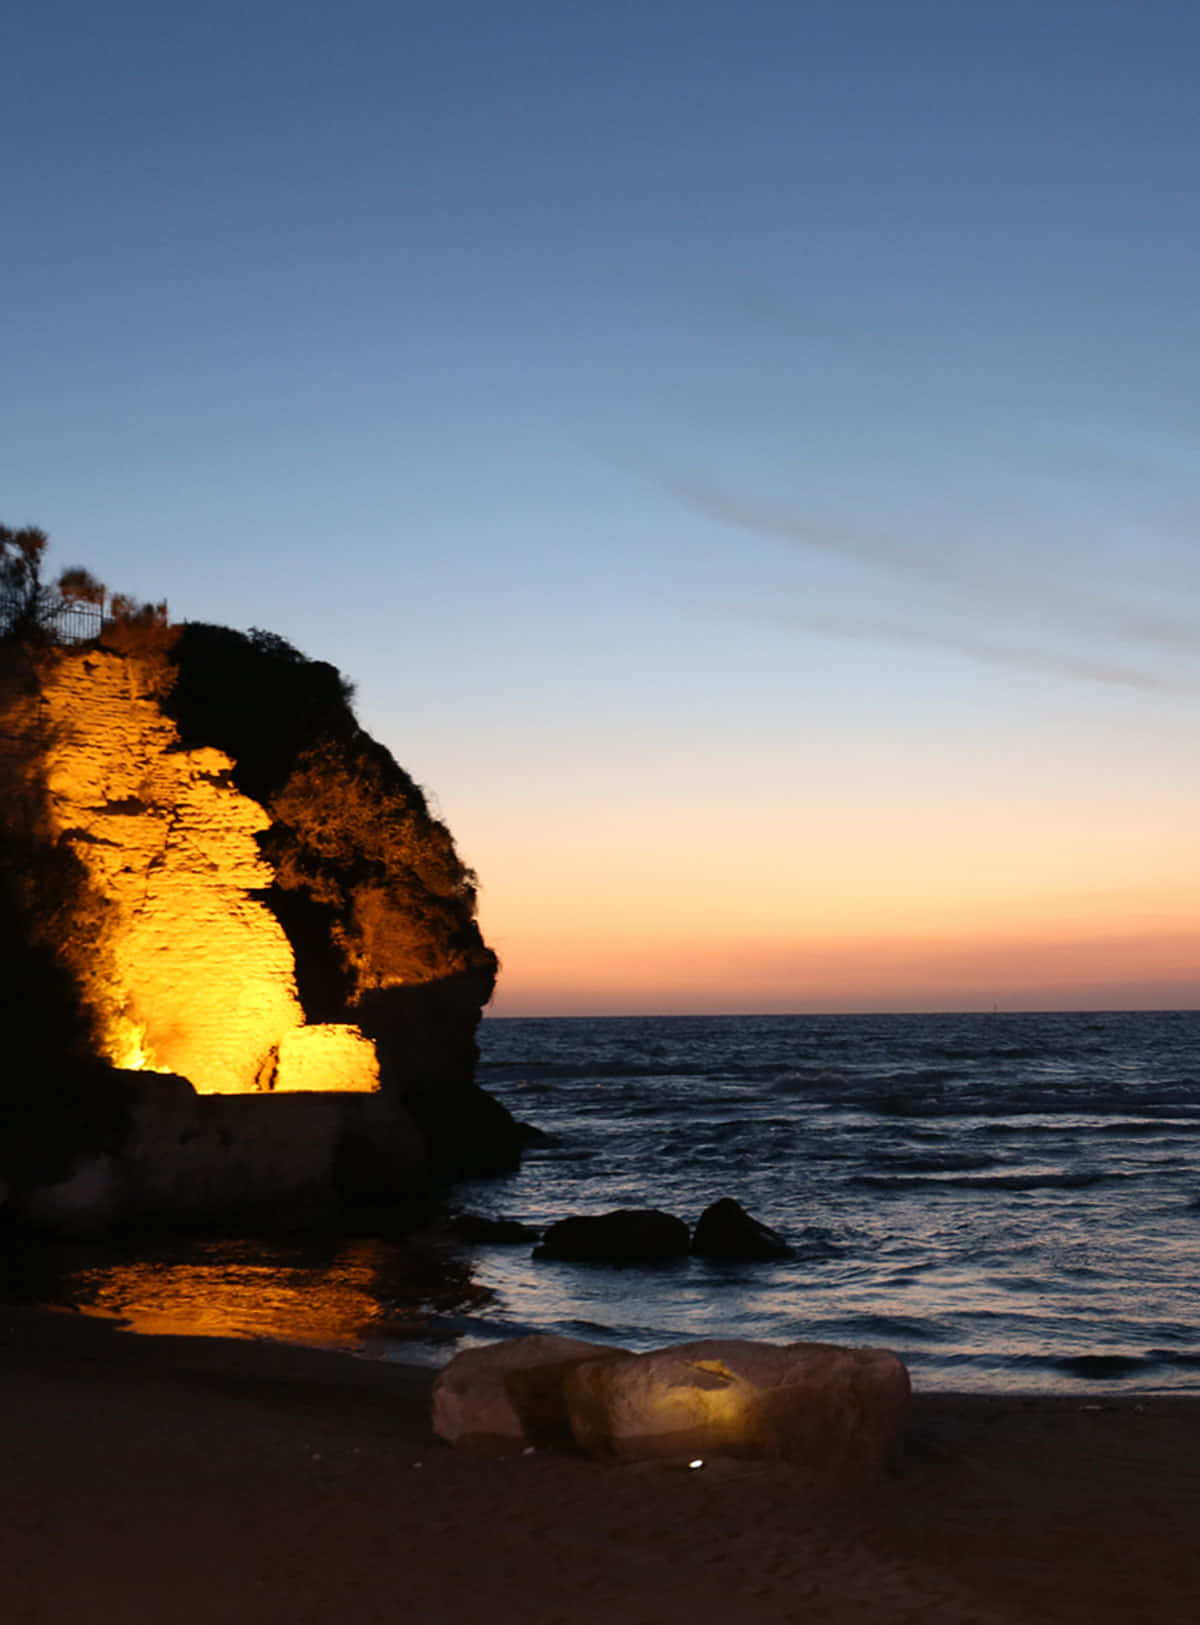 Iphone X Malibu Background Fire Light In The Coast